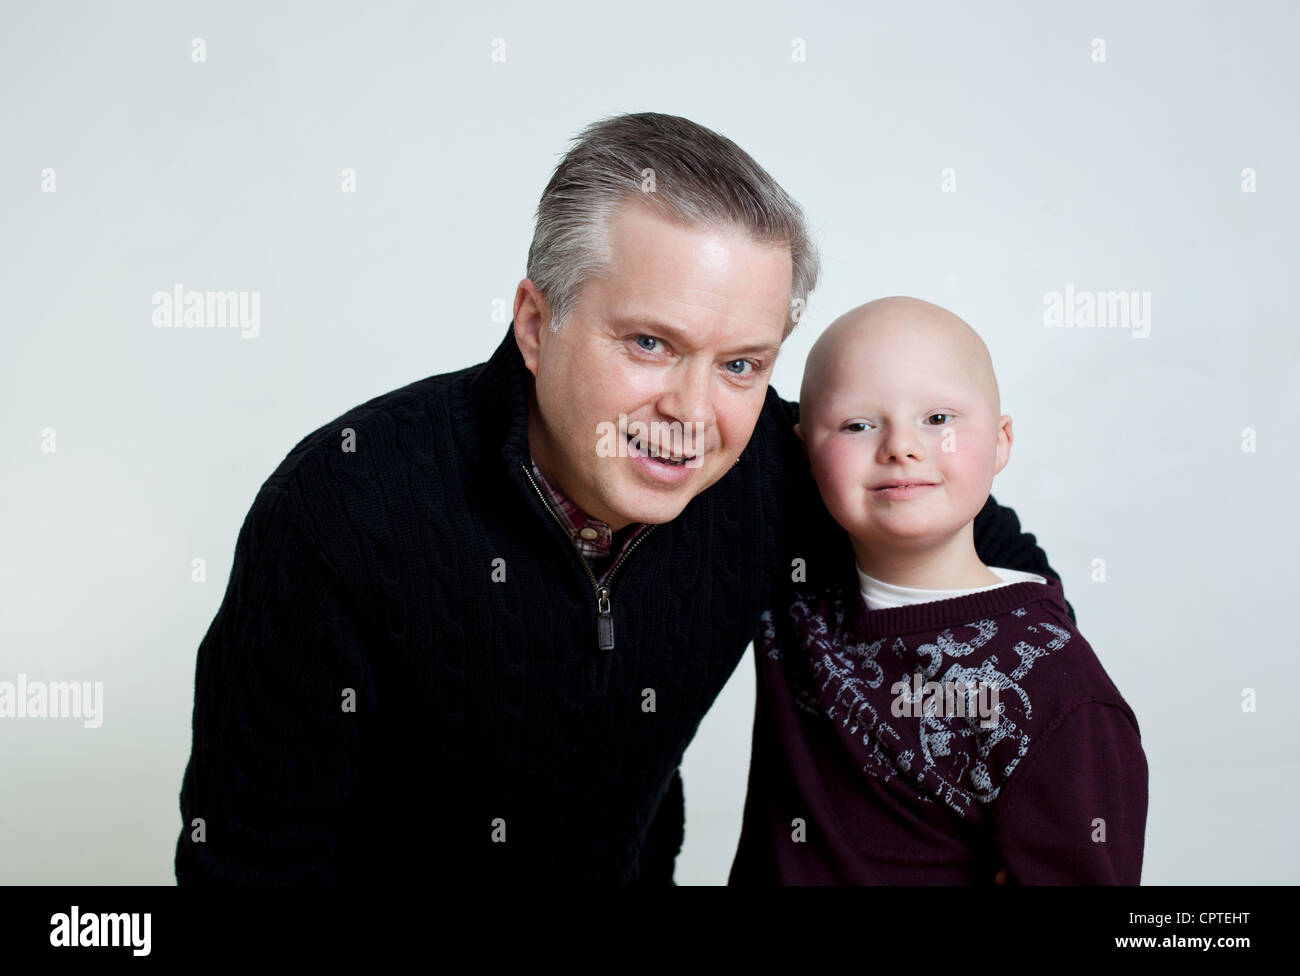 Vater und Sohn mit Down-Syndrom, Porträt Stockfoto